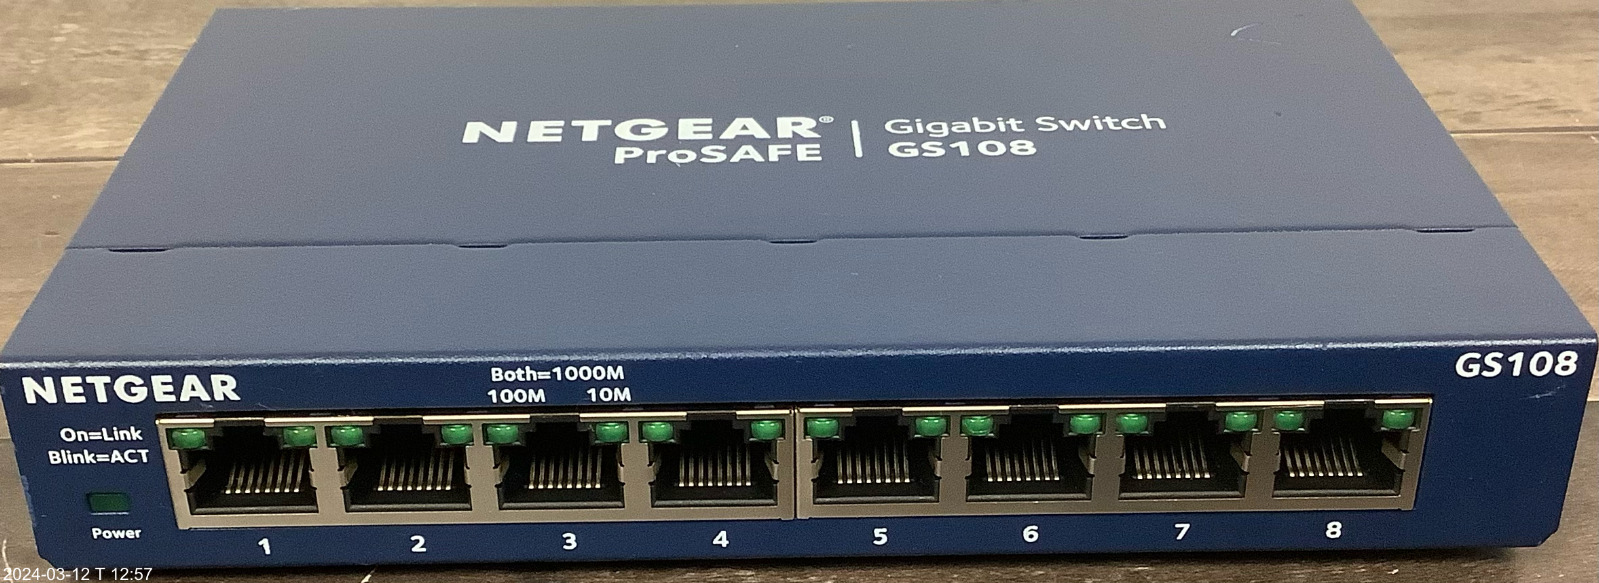 NETGEAR PROSAFE GIGABIT SWITCH GS108V4 with ac adapter